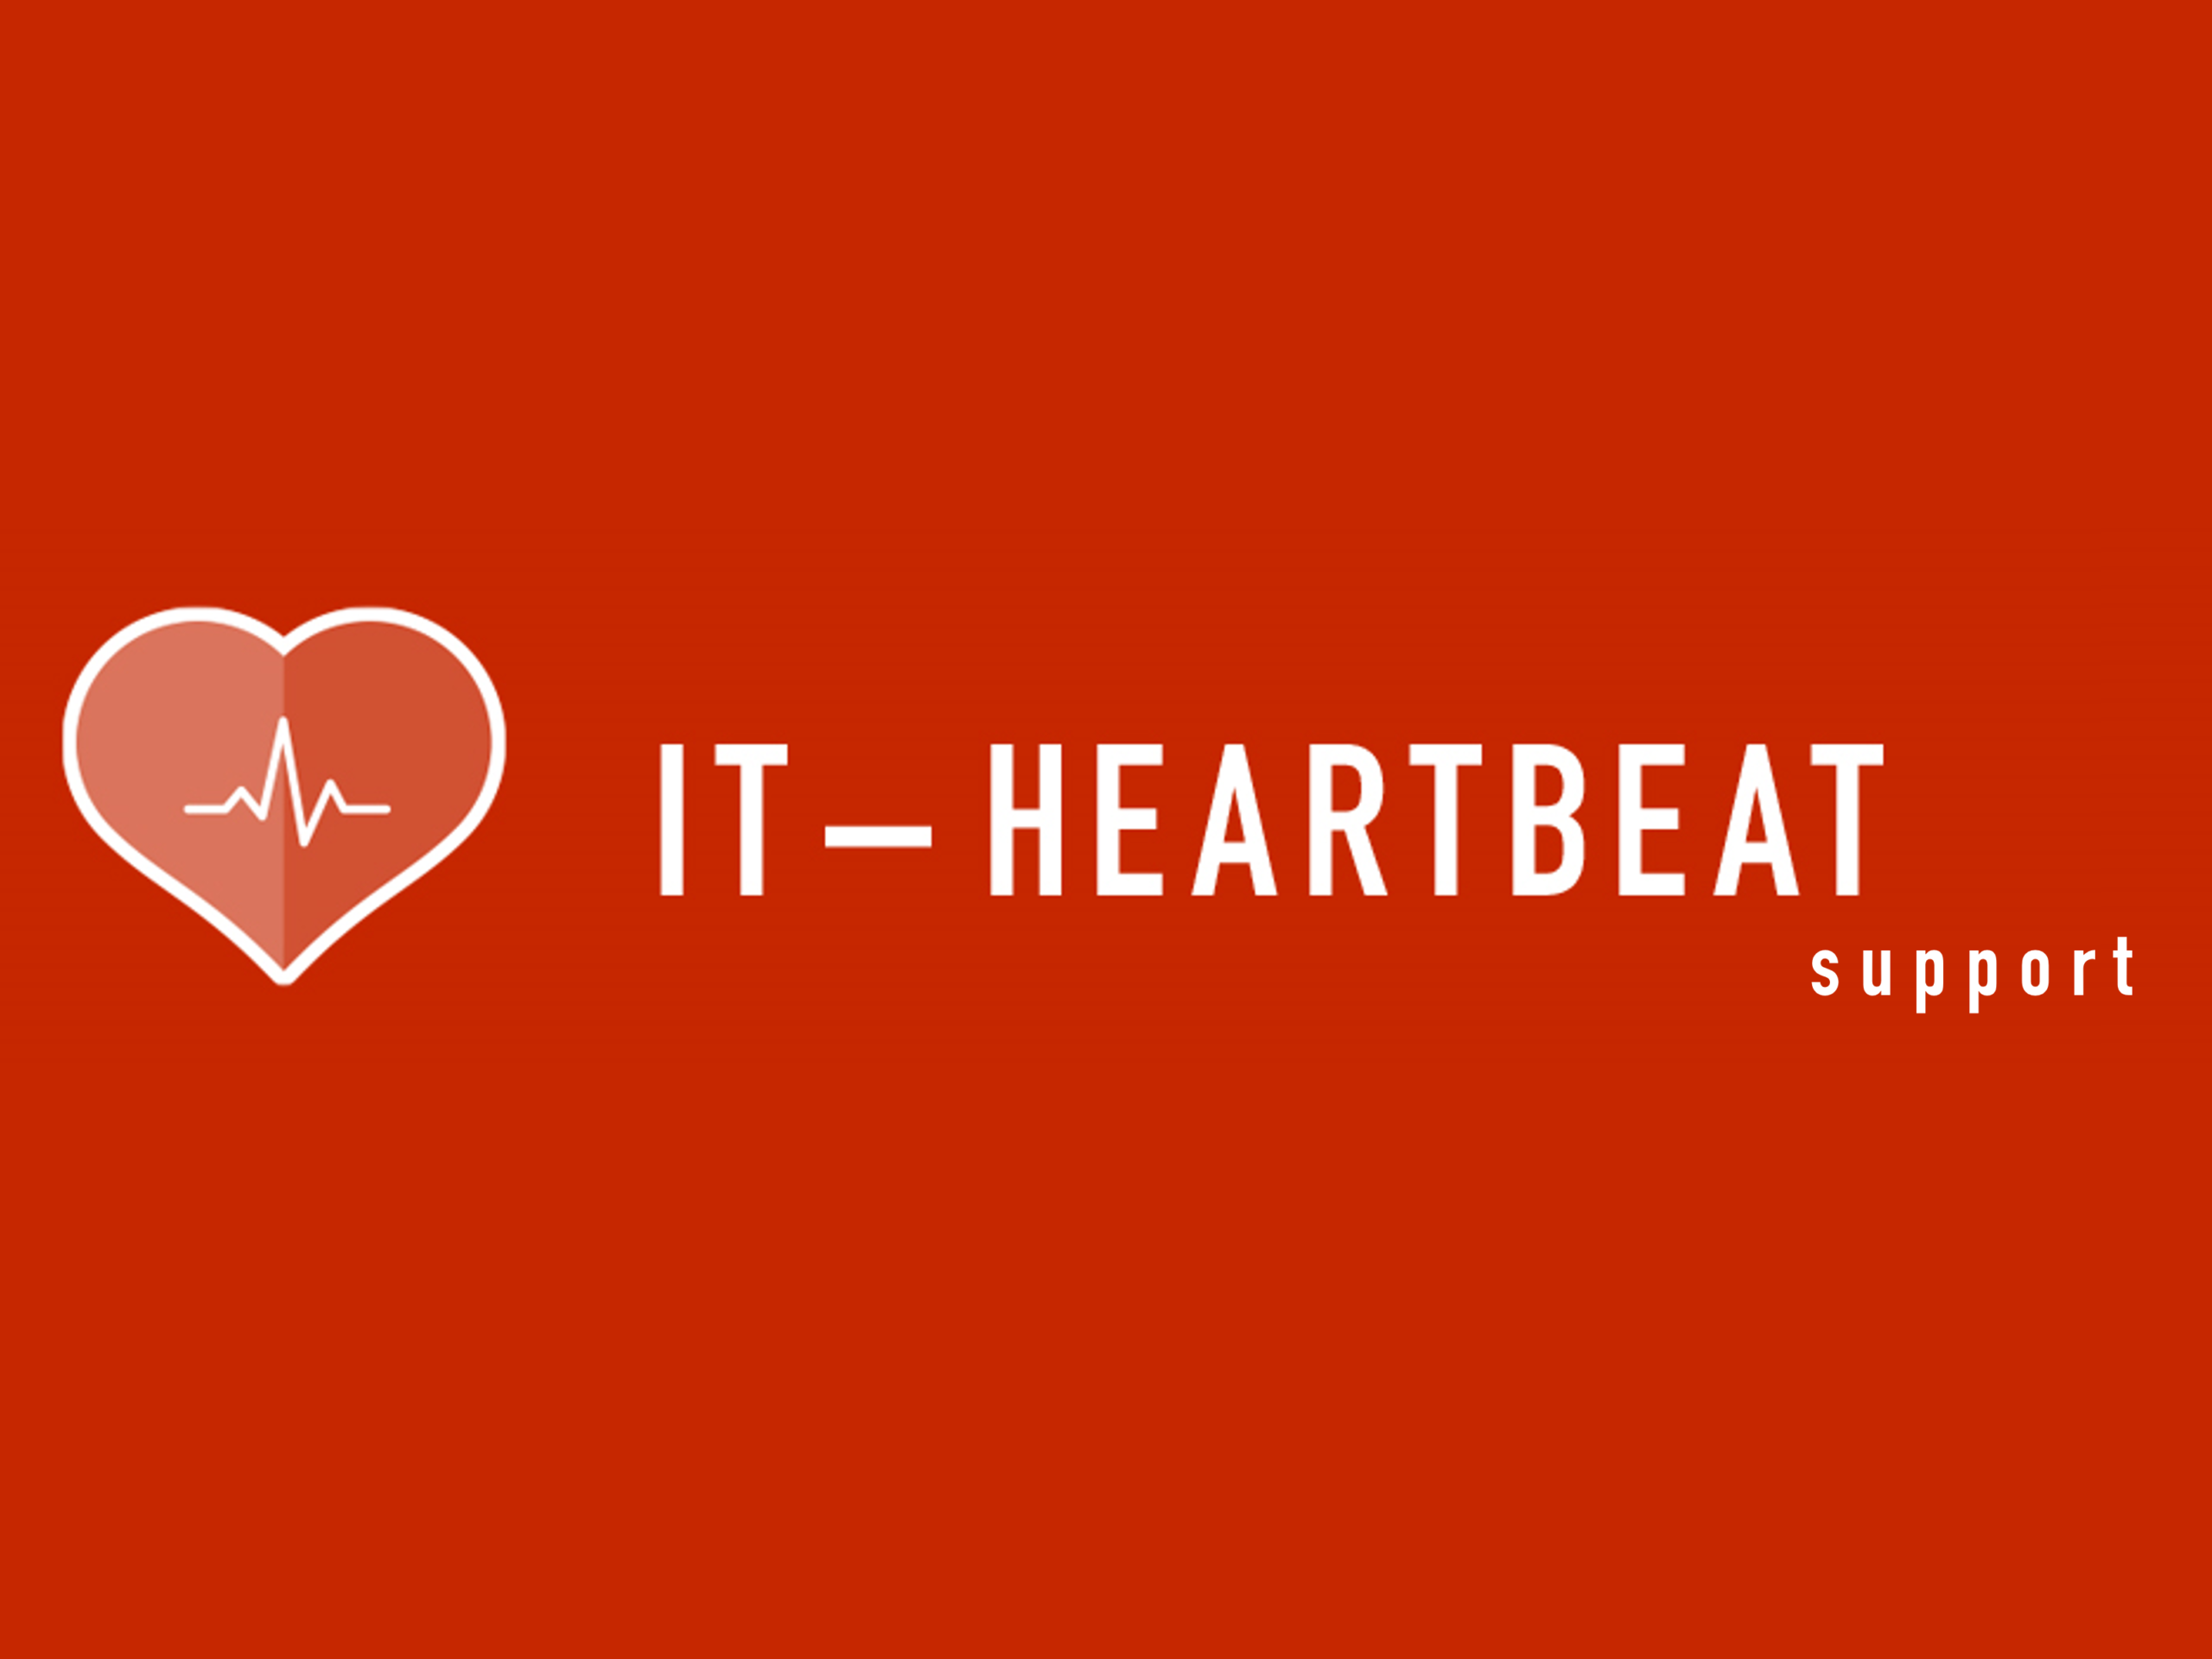 Image de service IT-HEARTBEAT support